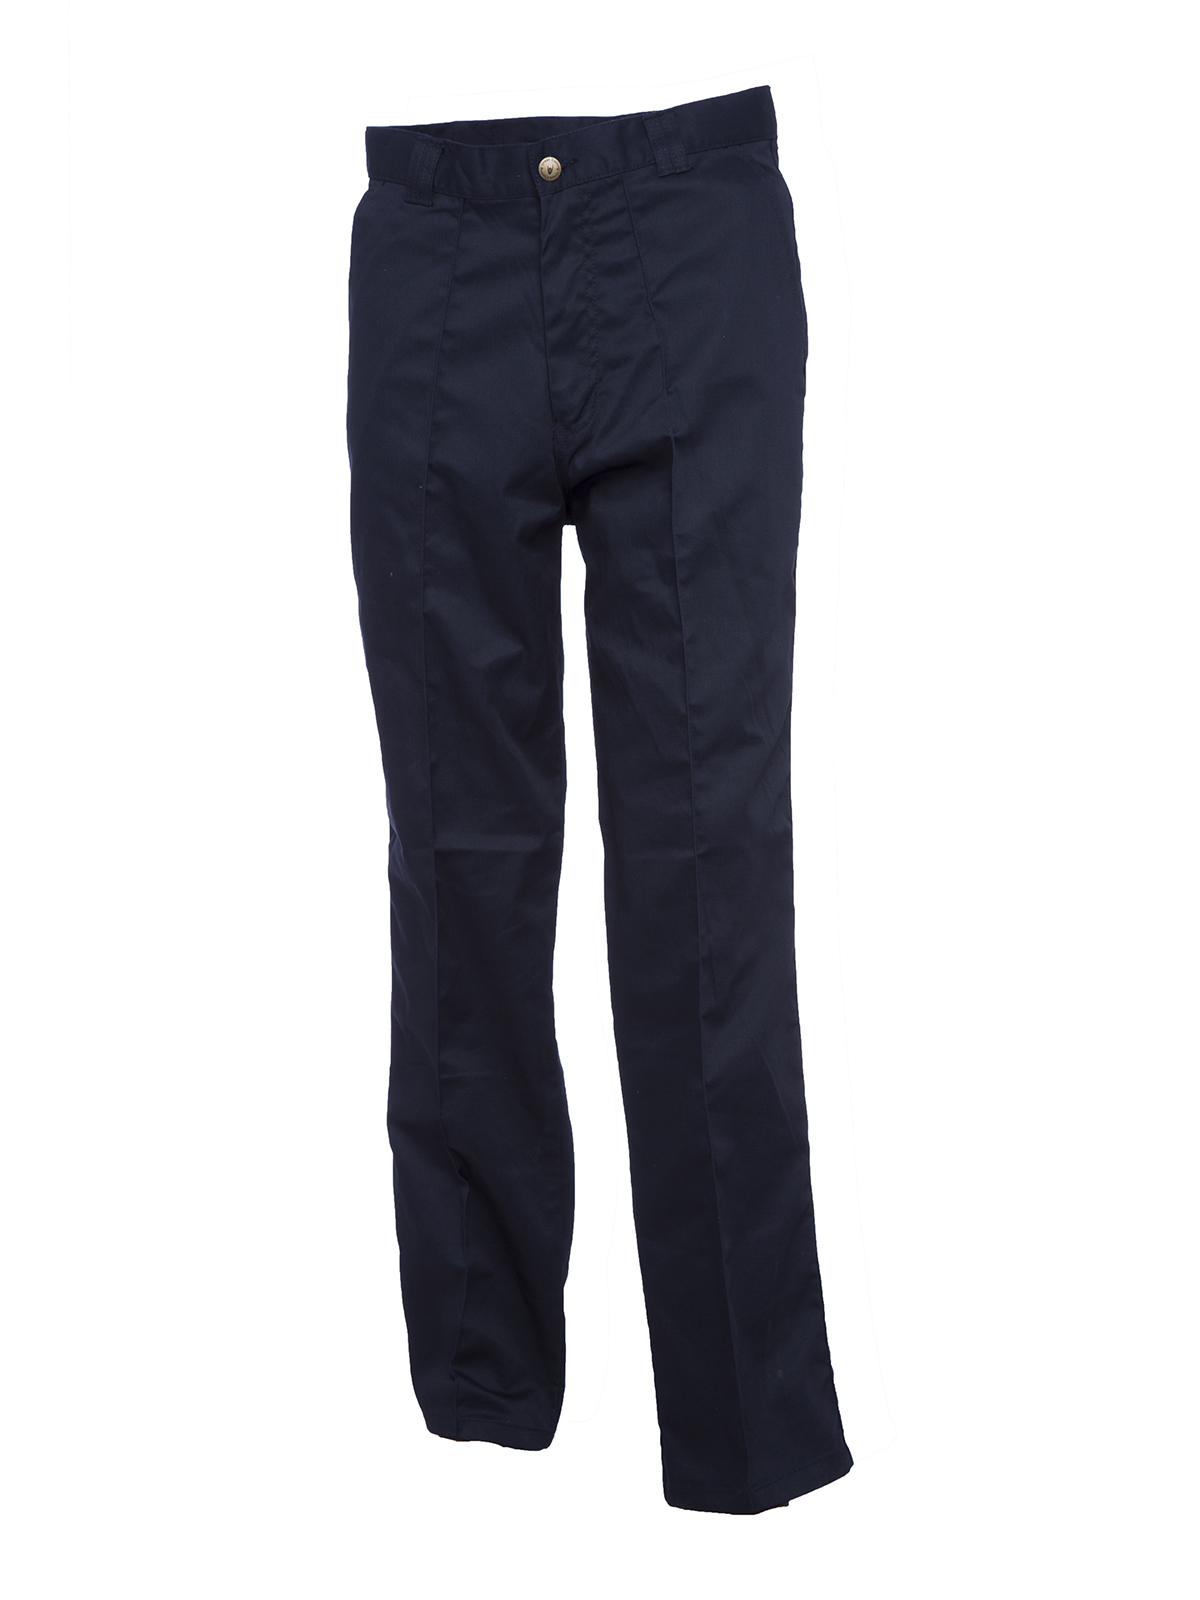 Workwear Trousers, Navy Blue - 30L